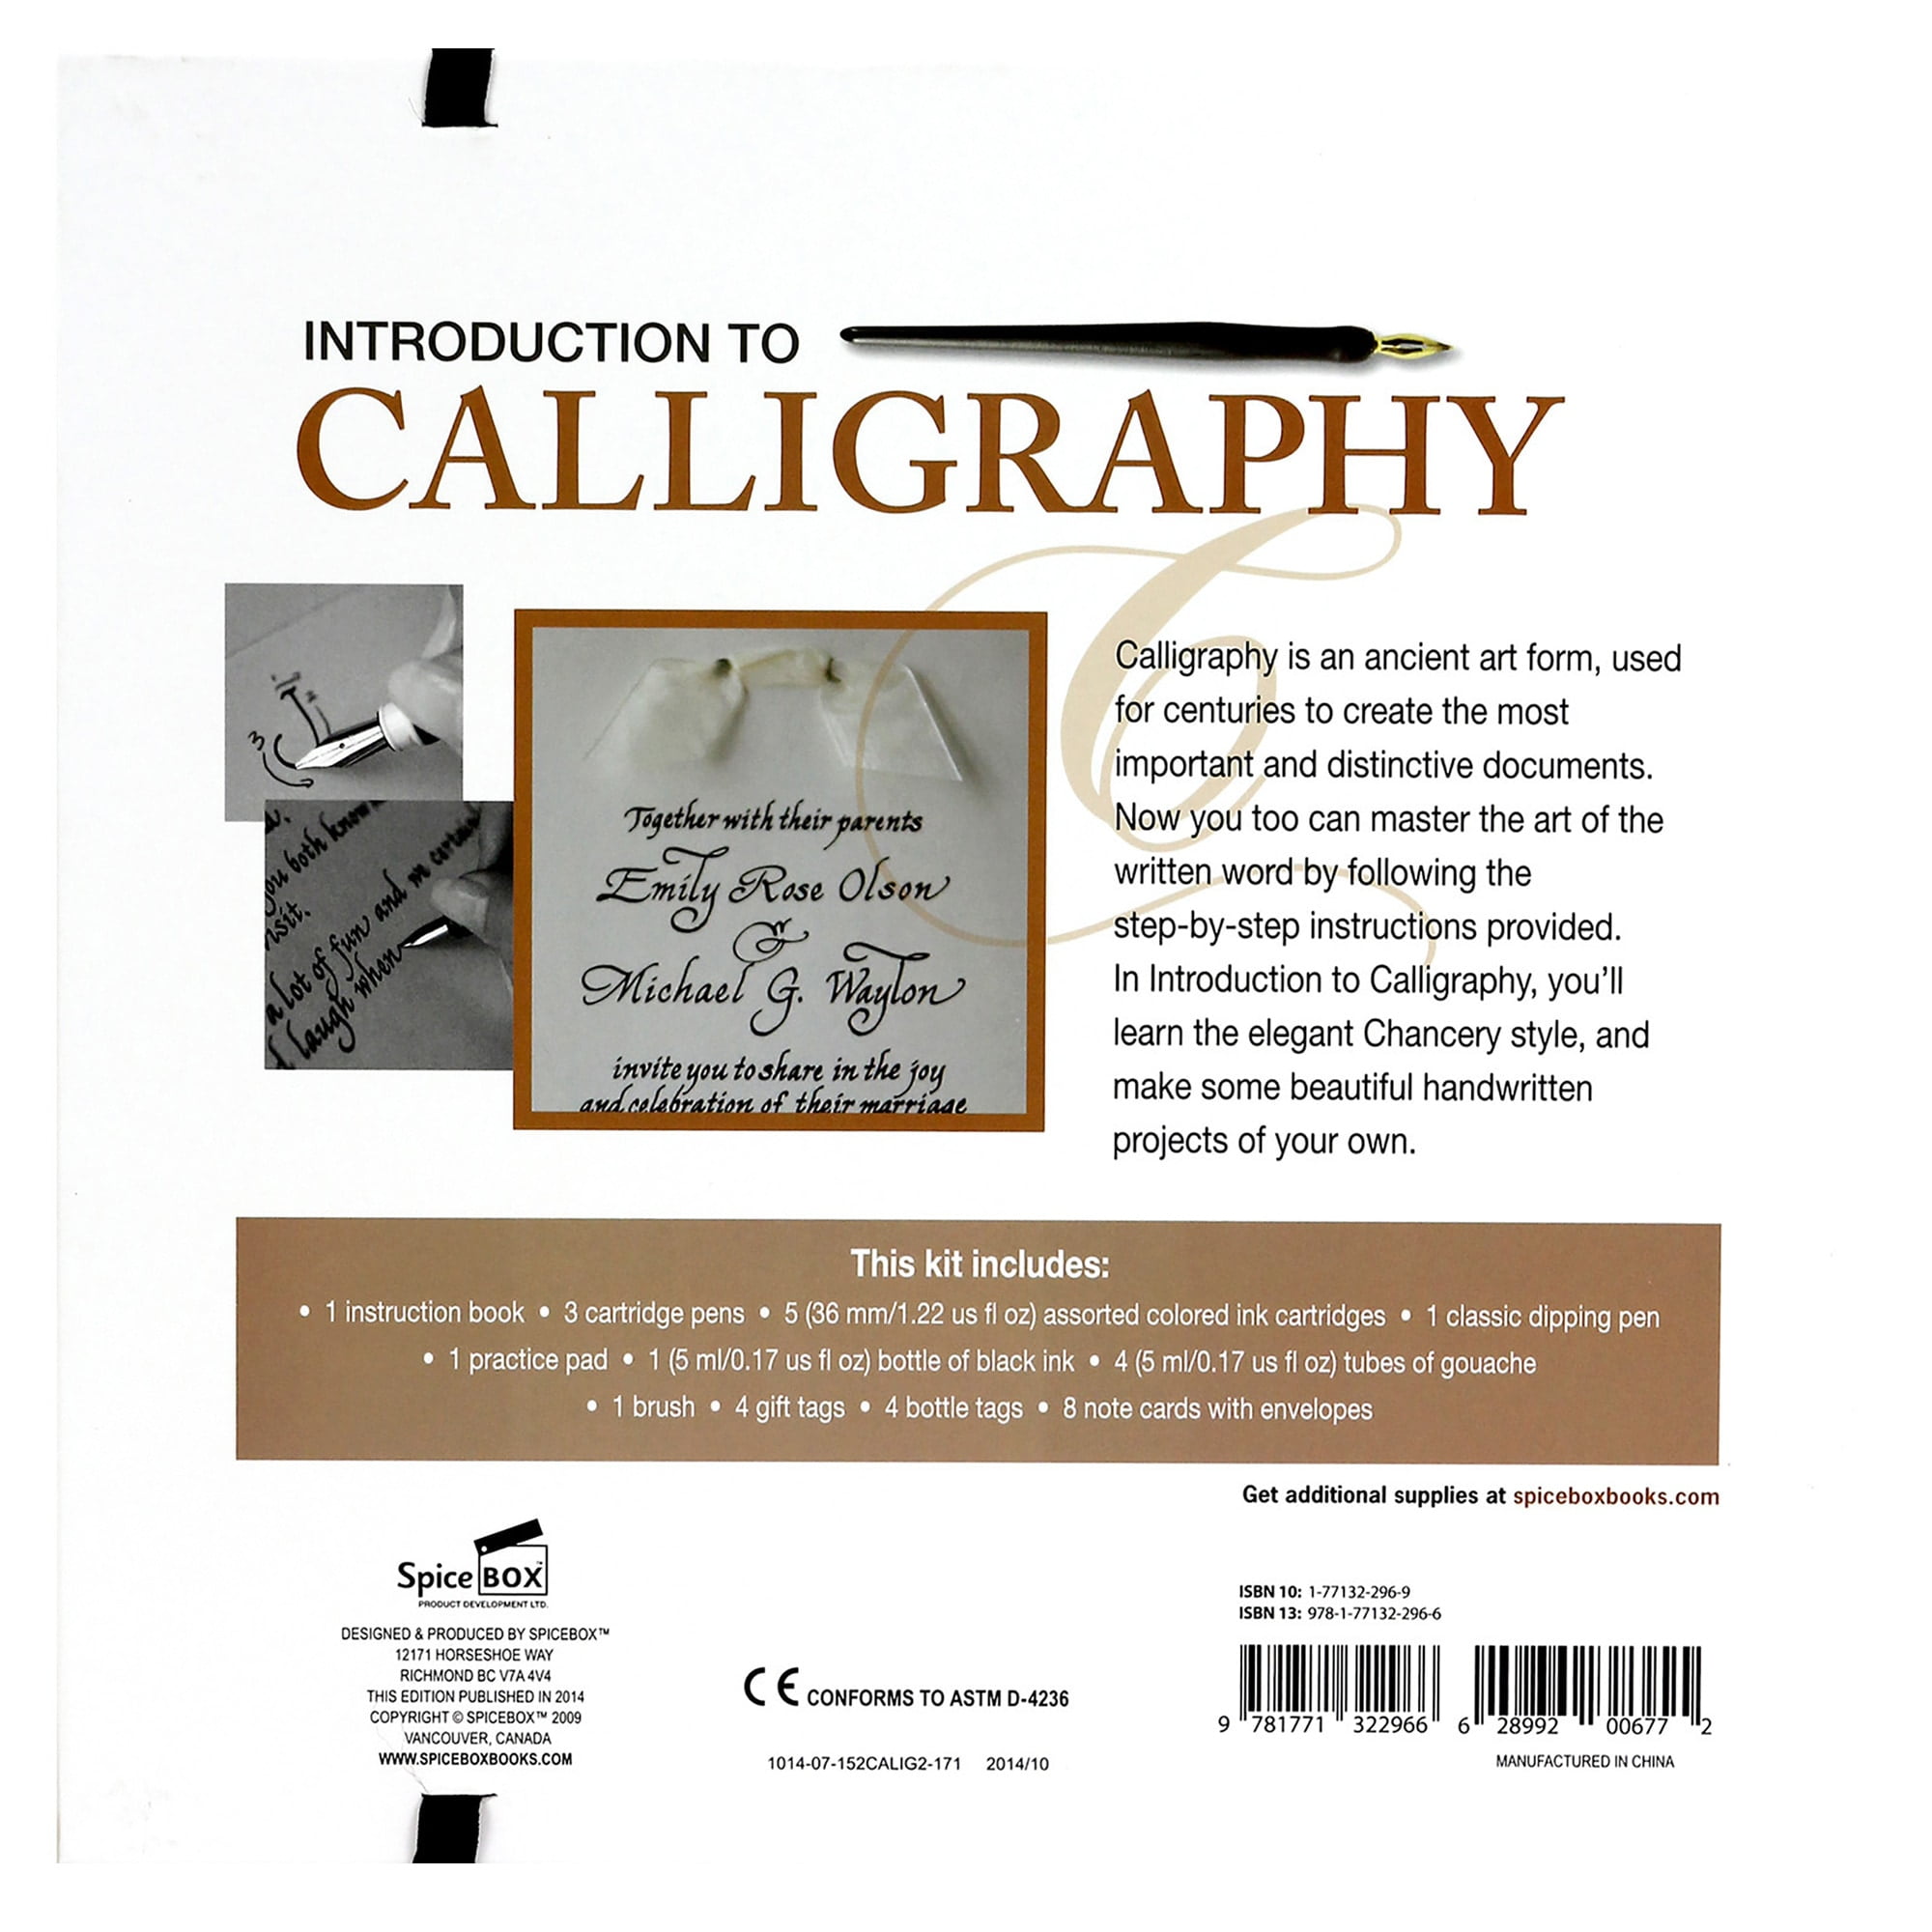 SpiceBox Adult Art Craft & Hobby Kits Art Studio Calligraphy